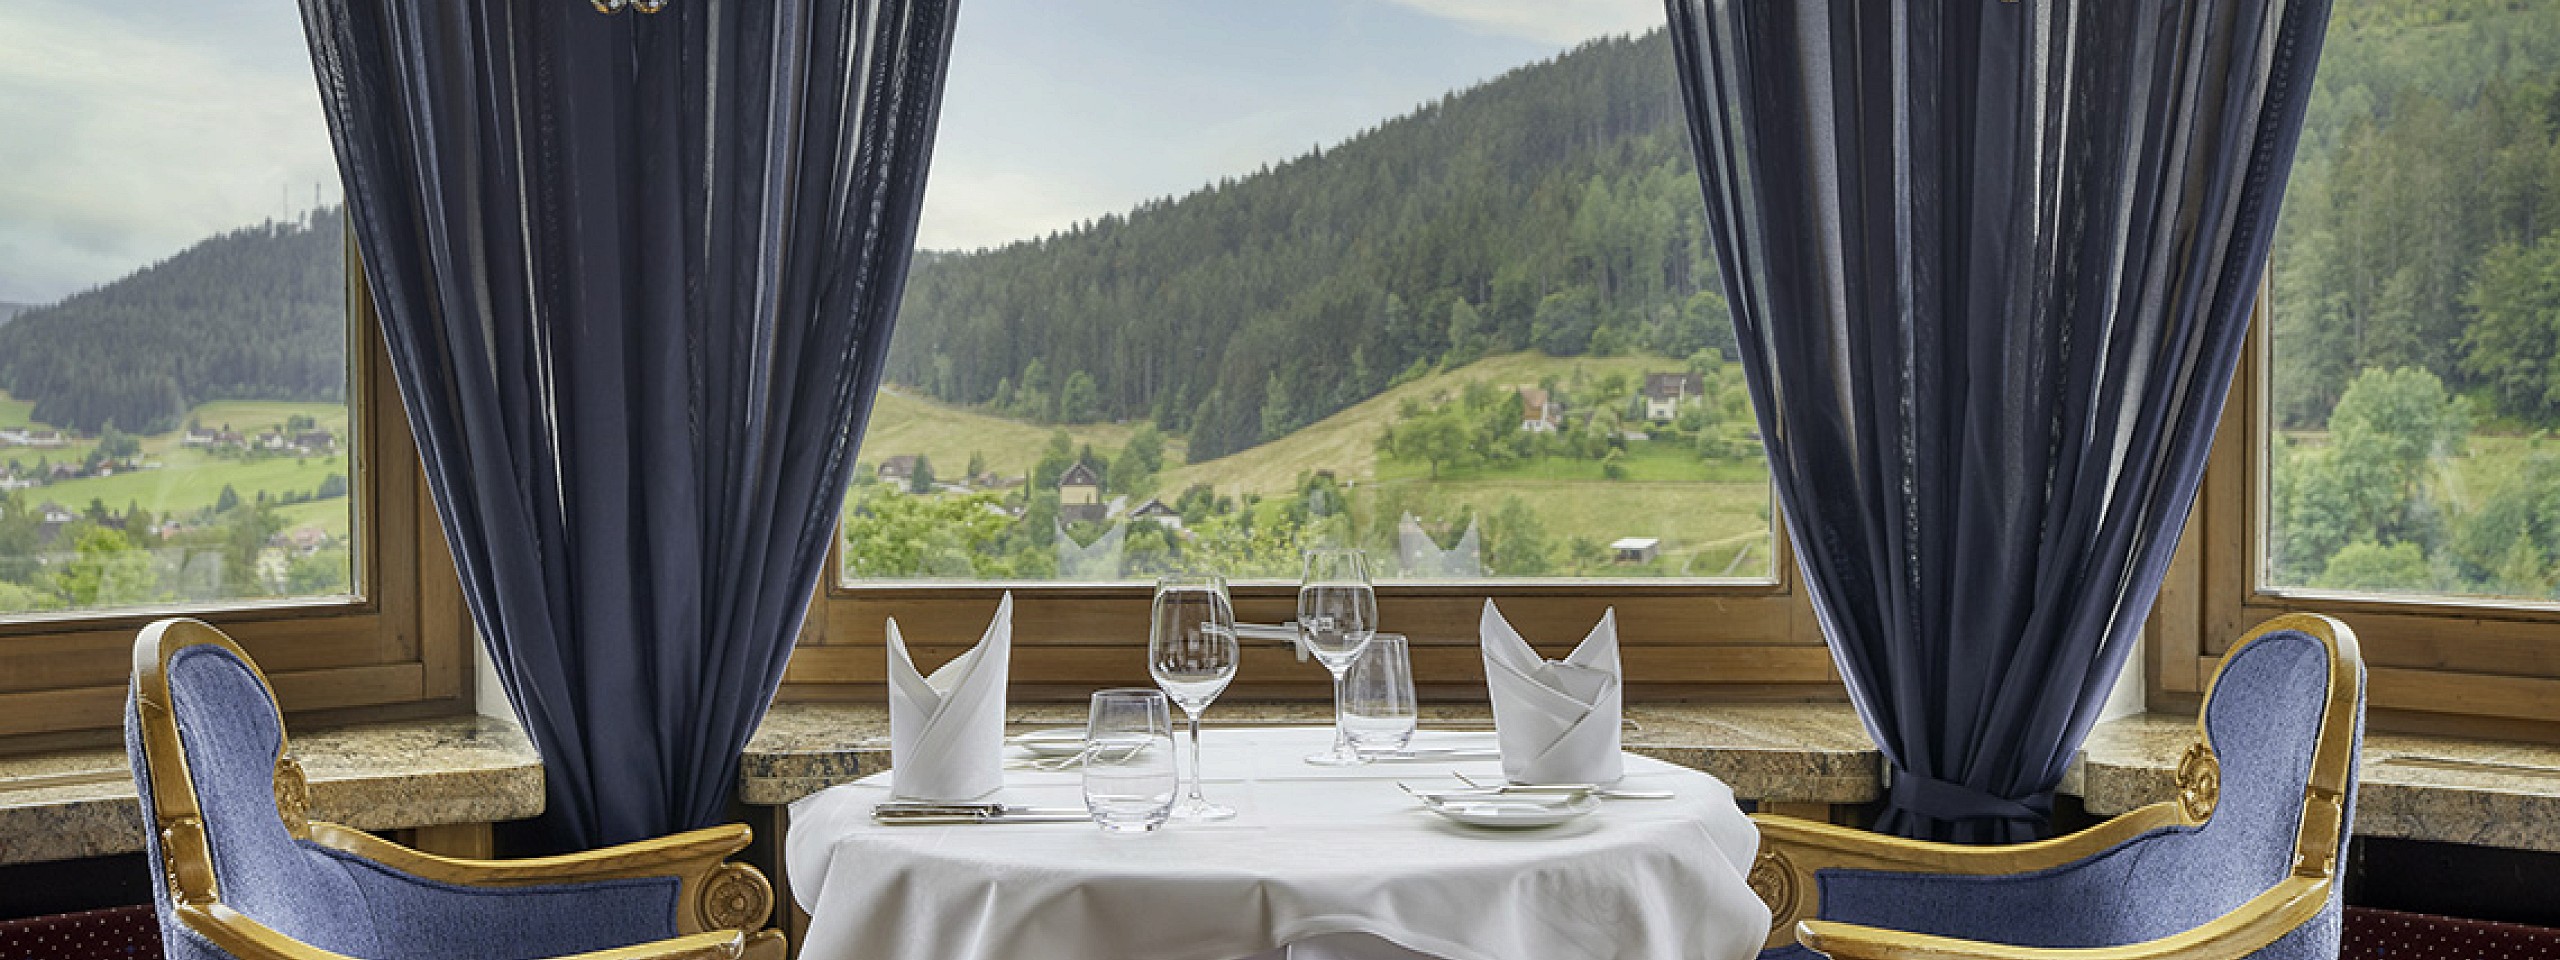 Edler Tisch mit Panoramablick im Restaurant Silberberg in Baiersbronn.